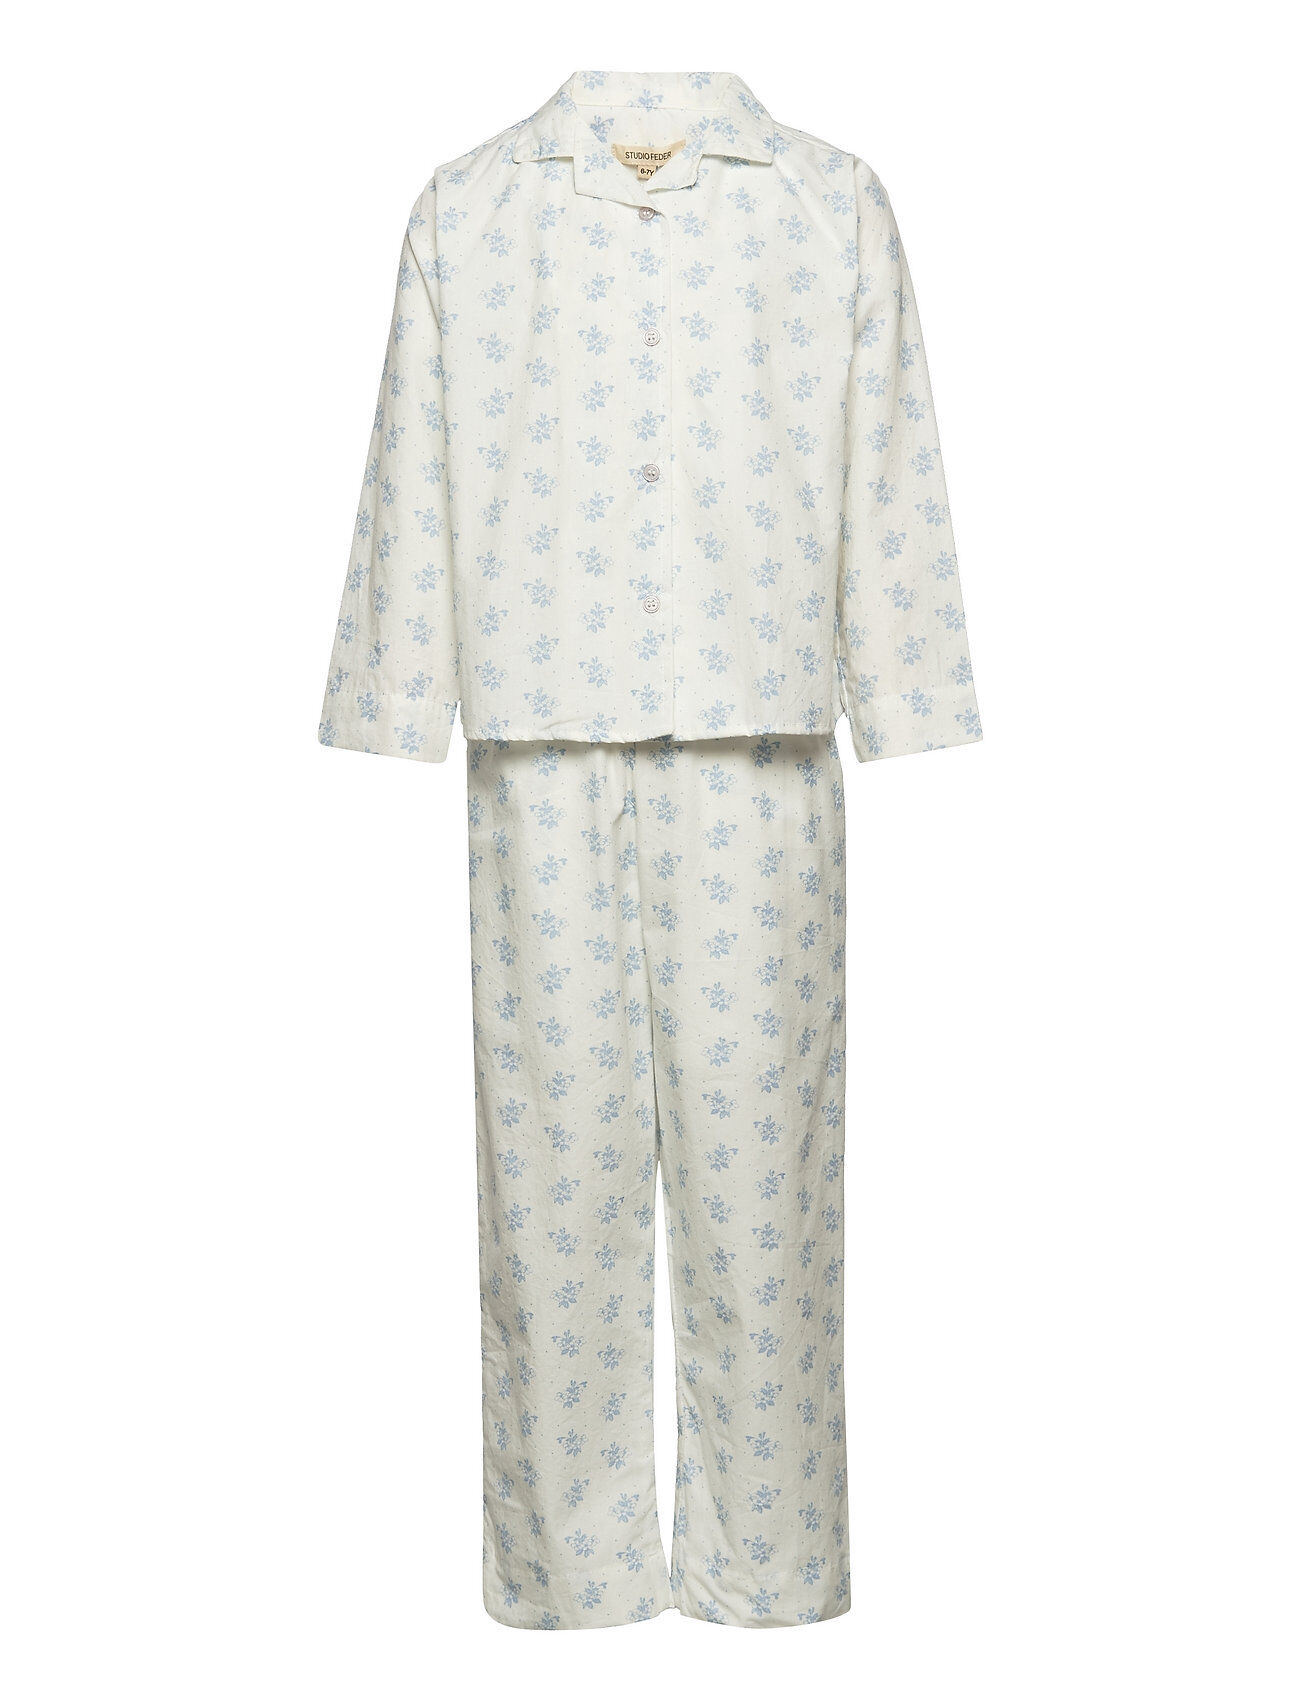 STUDIO FEDER Pajama Pyjamas Sett Multi/mønstret STUDIO FEDER